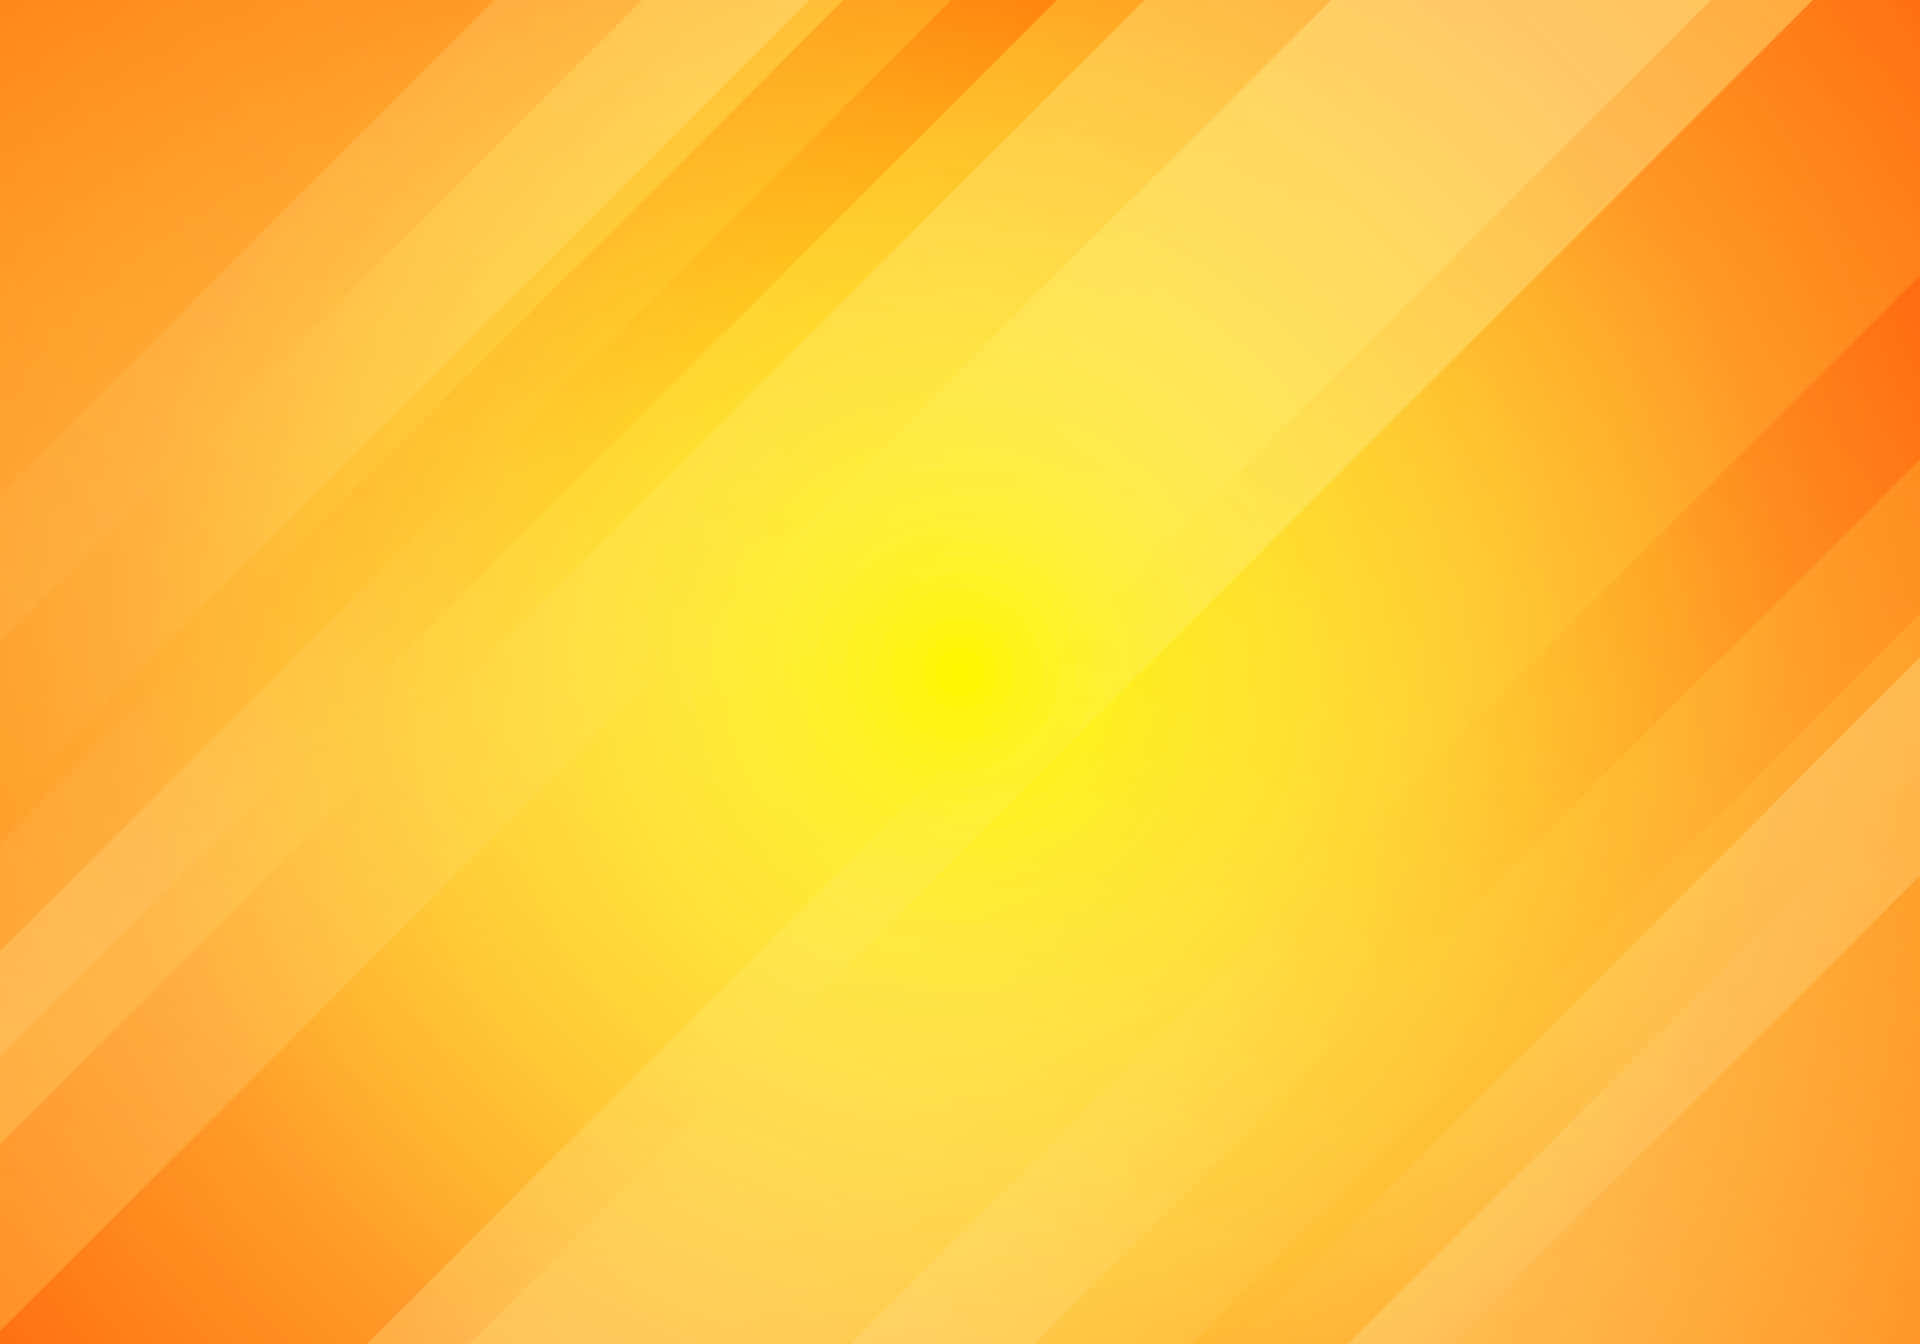 A vibrant Orange Gradient Background